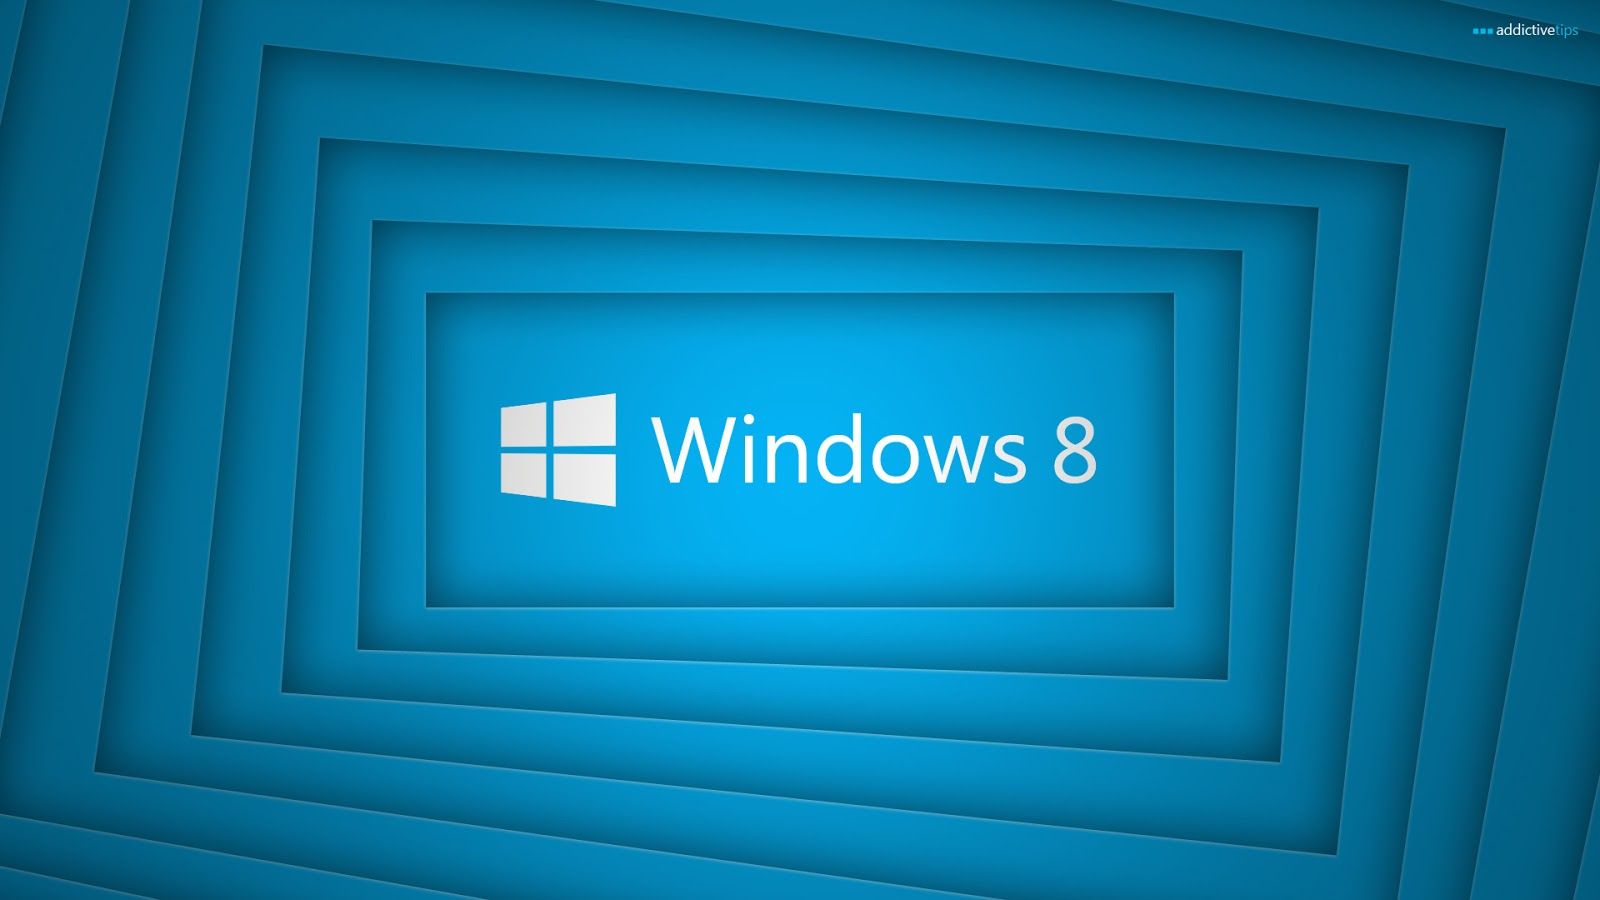 Windows 8 Wallpapers 1080p | hd wallon